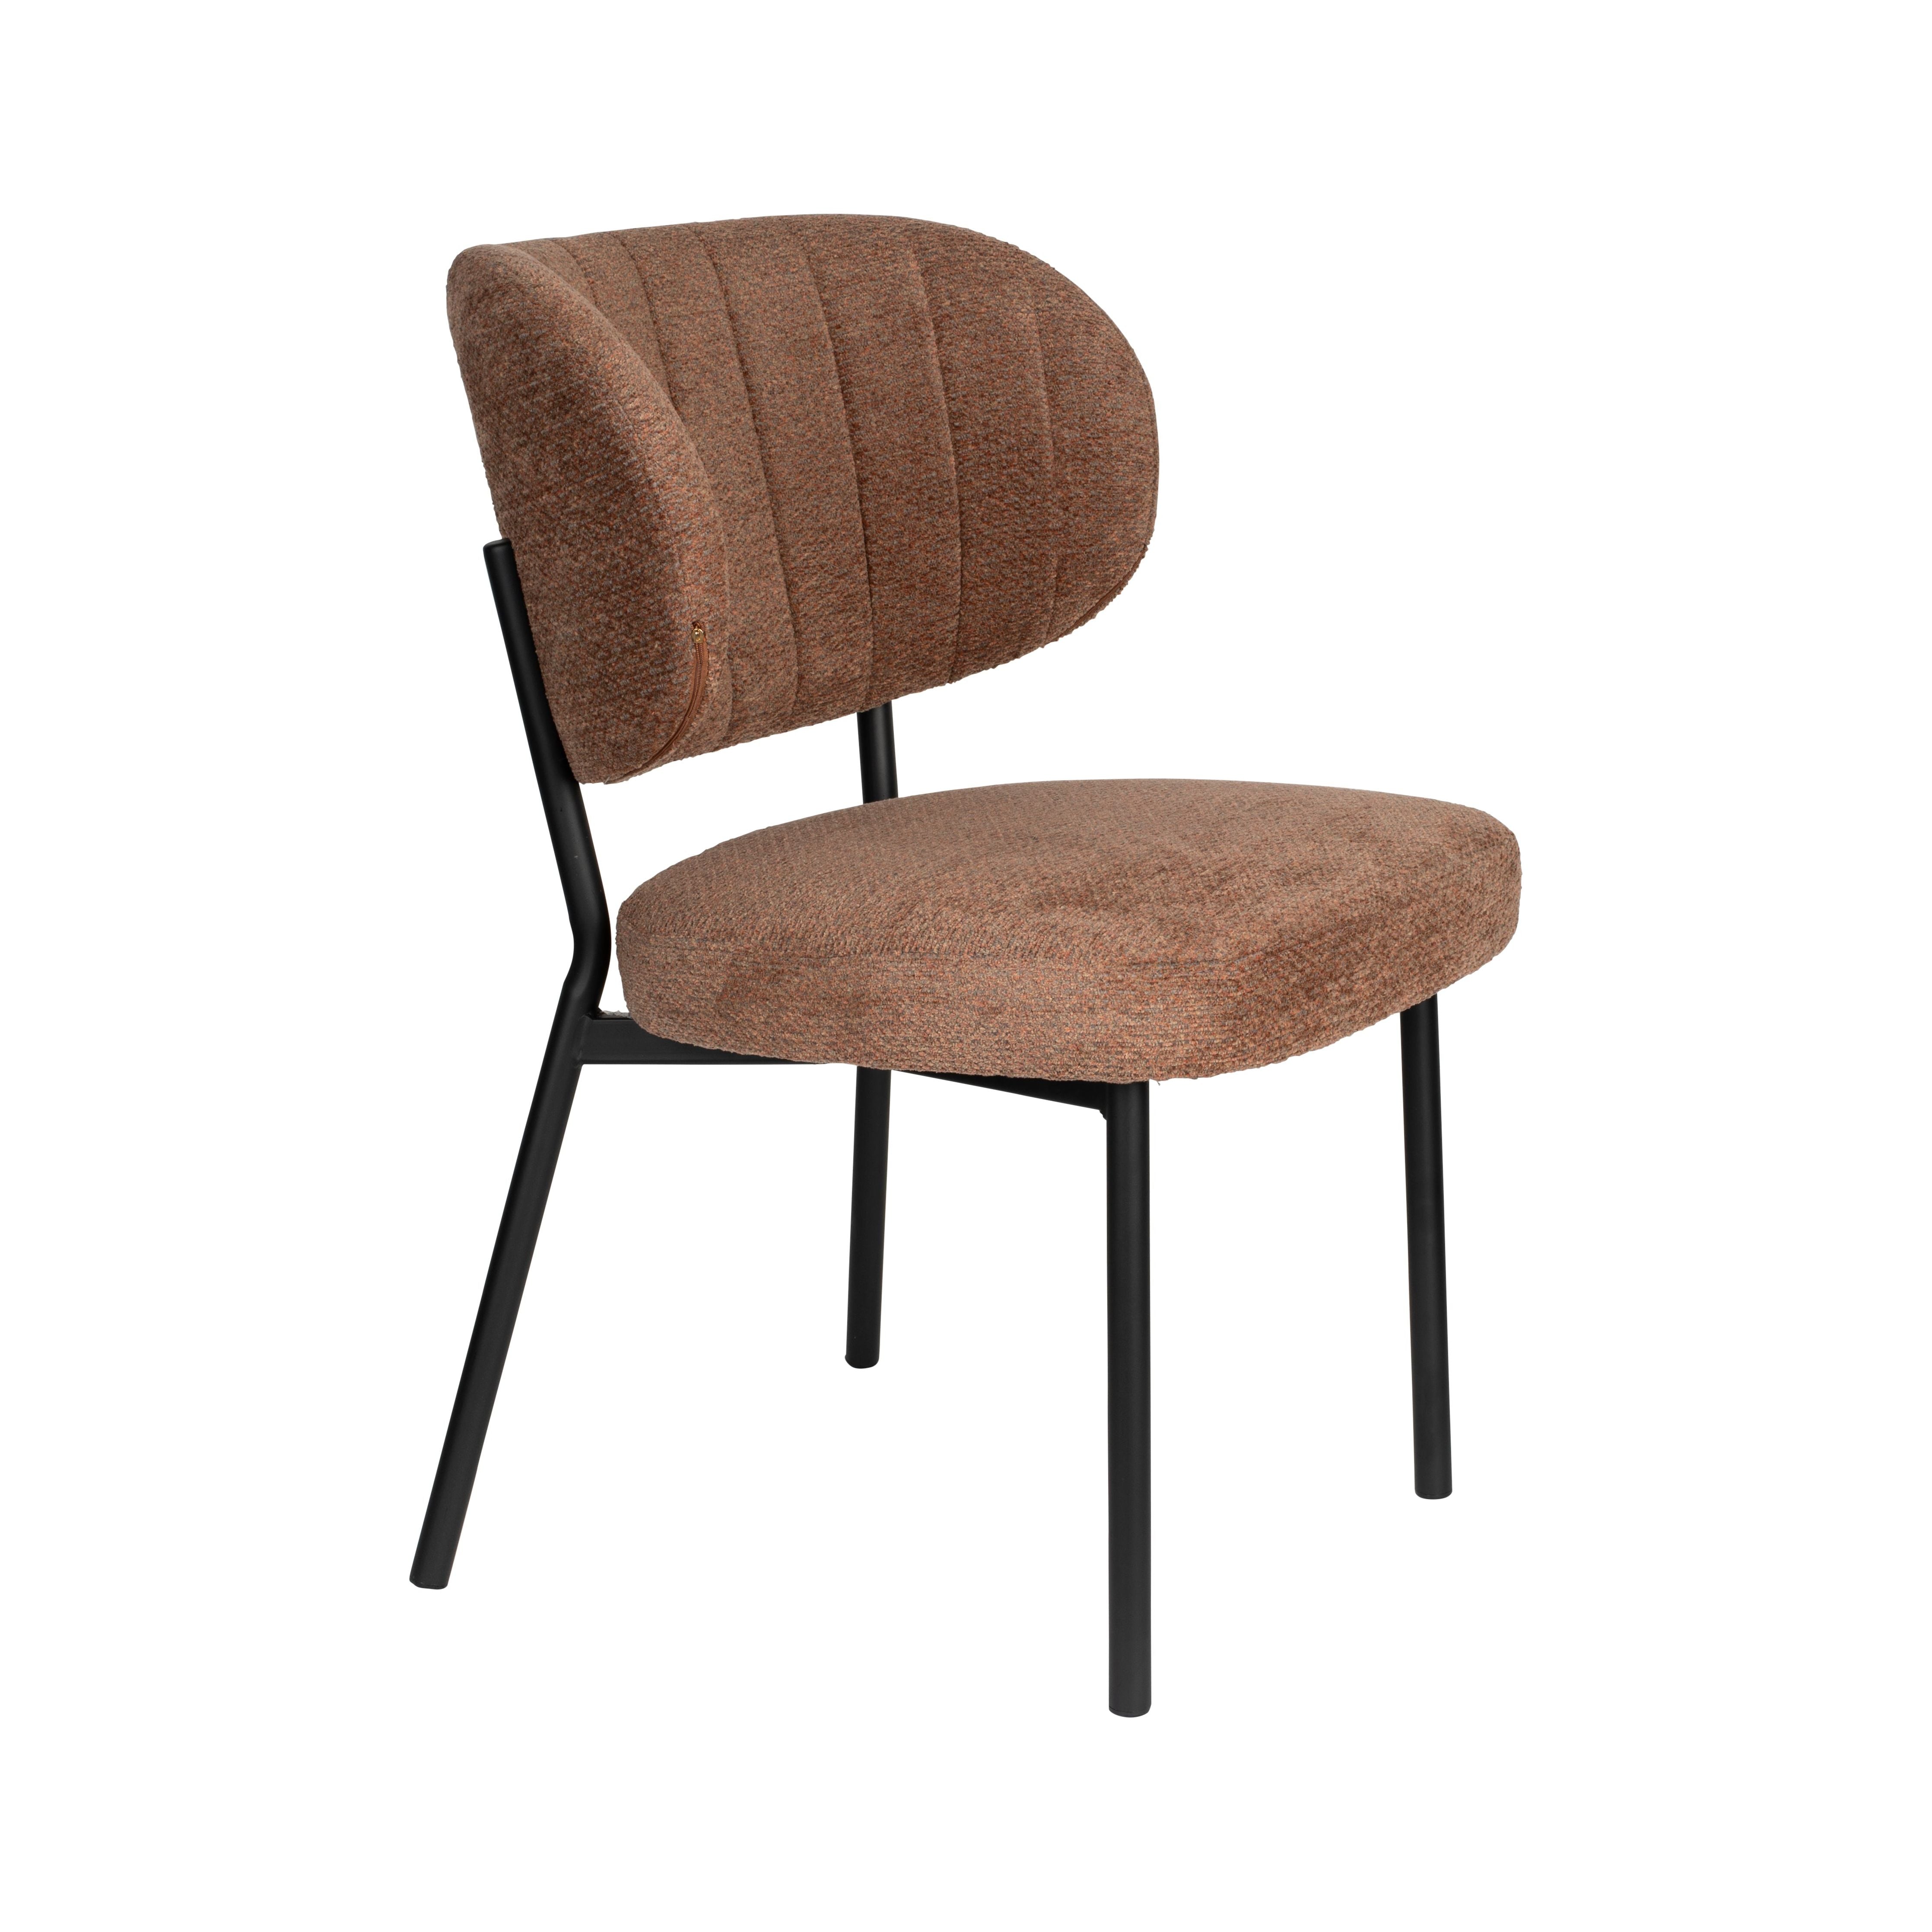 Chair sanne orange gray | 2 pieces